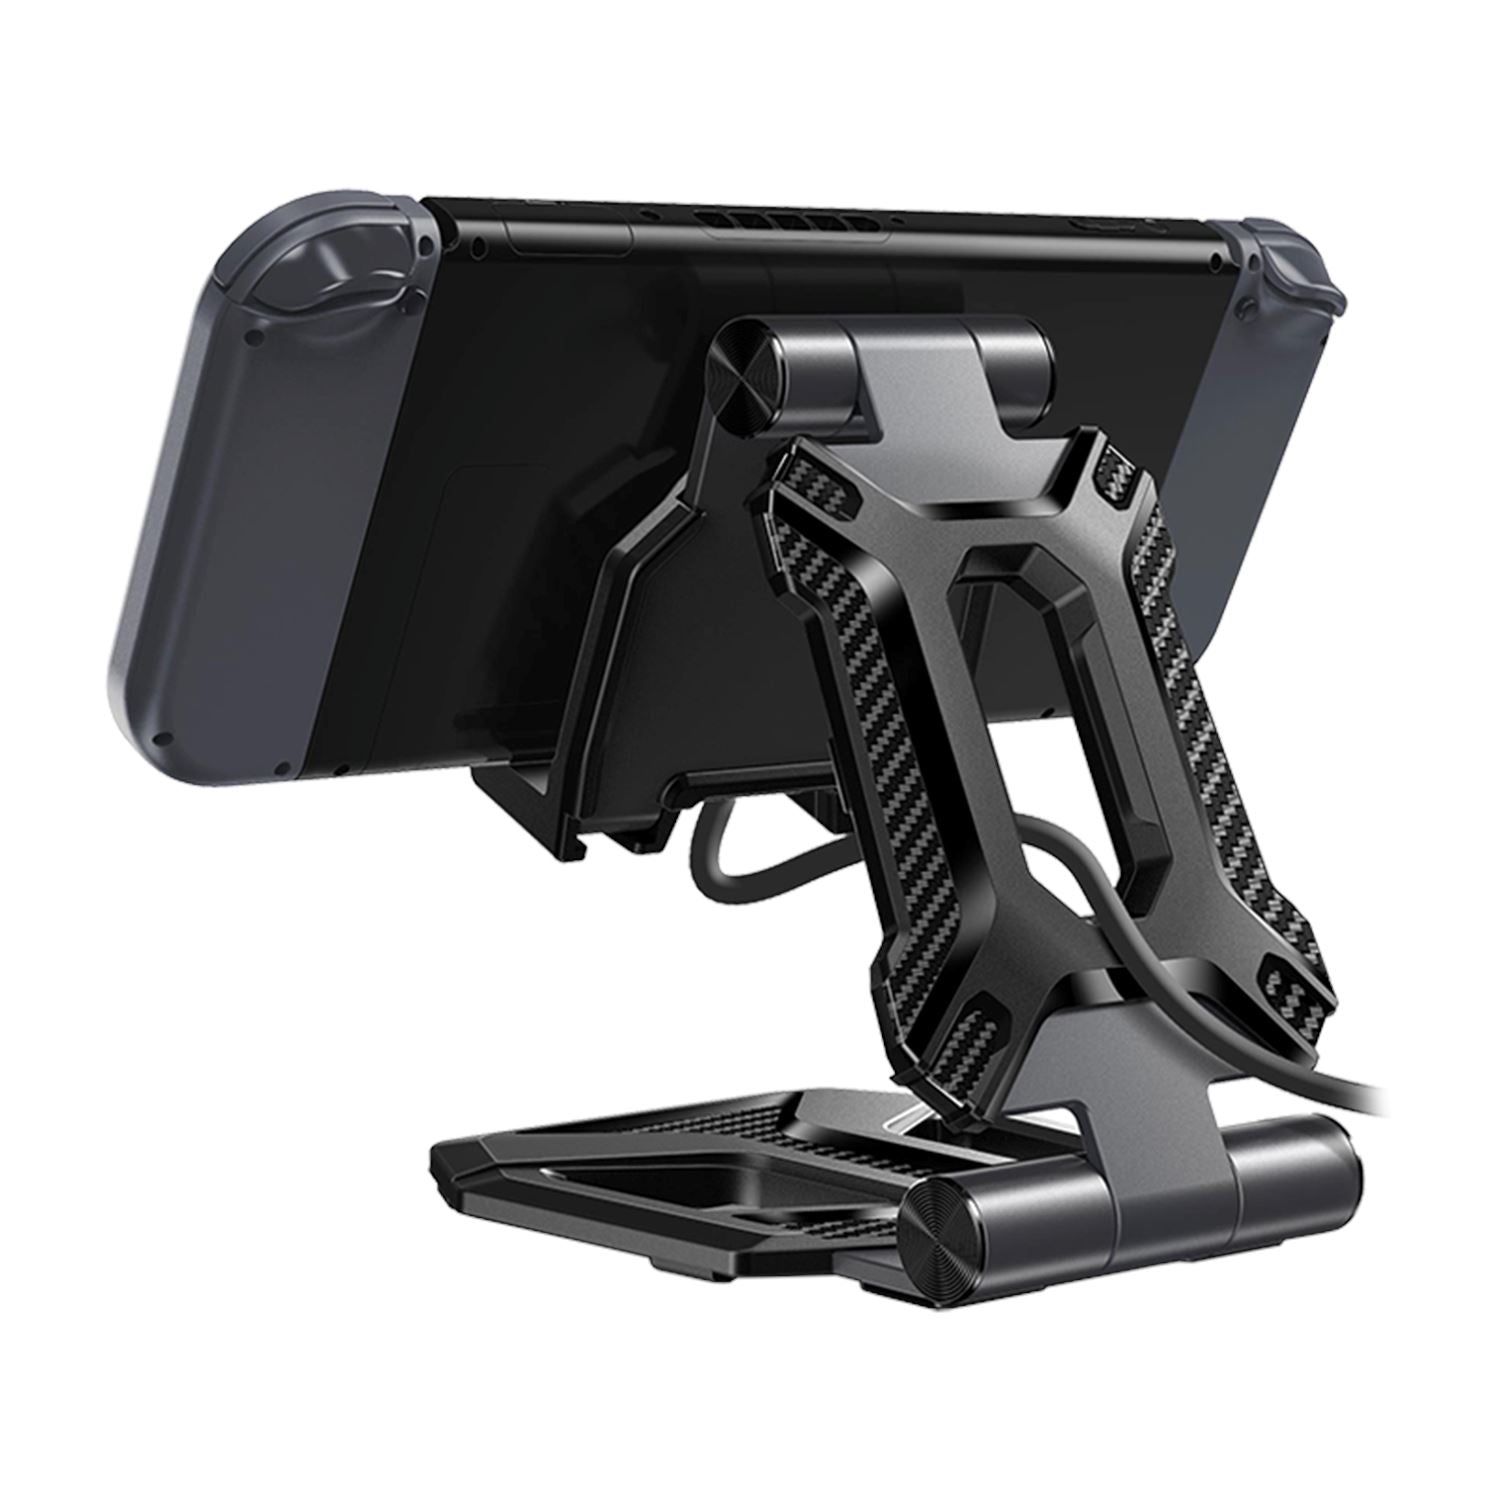 Supcase Heavy Duty Adjustable Desk Stand Holder for Phone Tablet Nintendo Switch Aluminium Foldable Mount Dock Default Supcase Black 